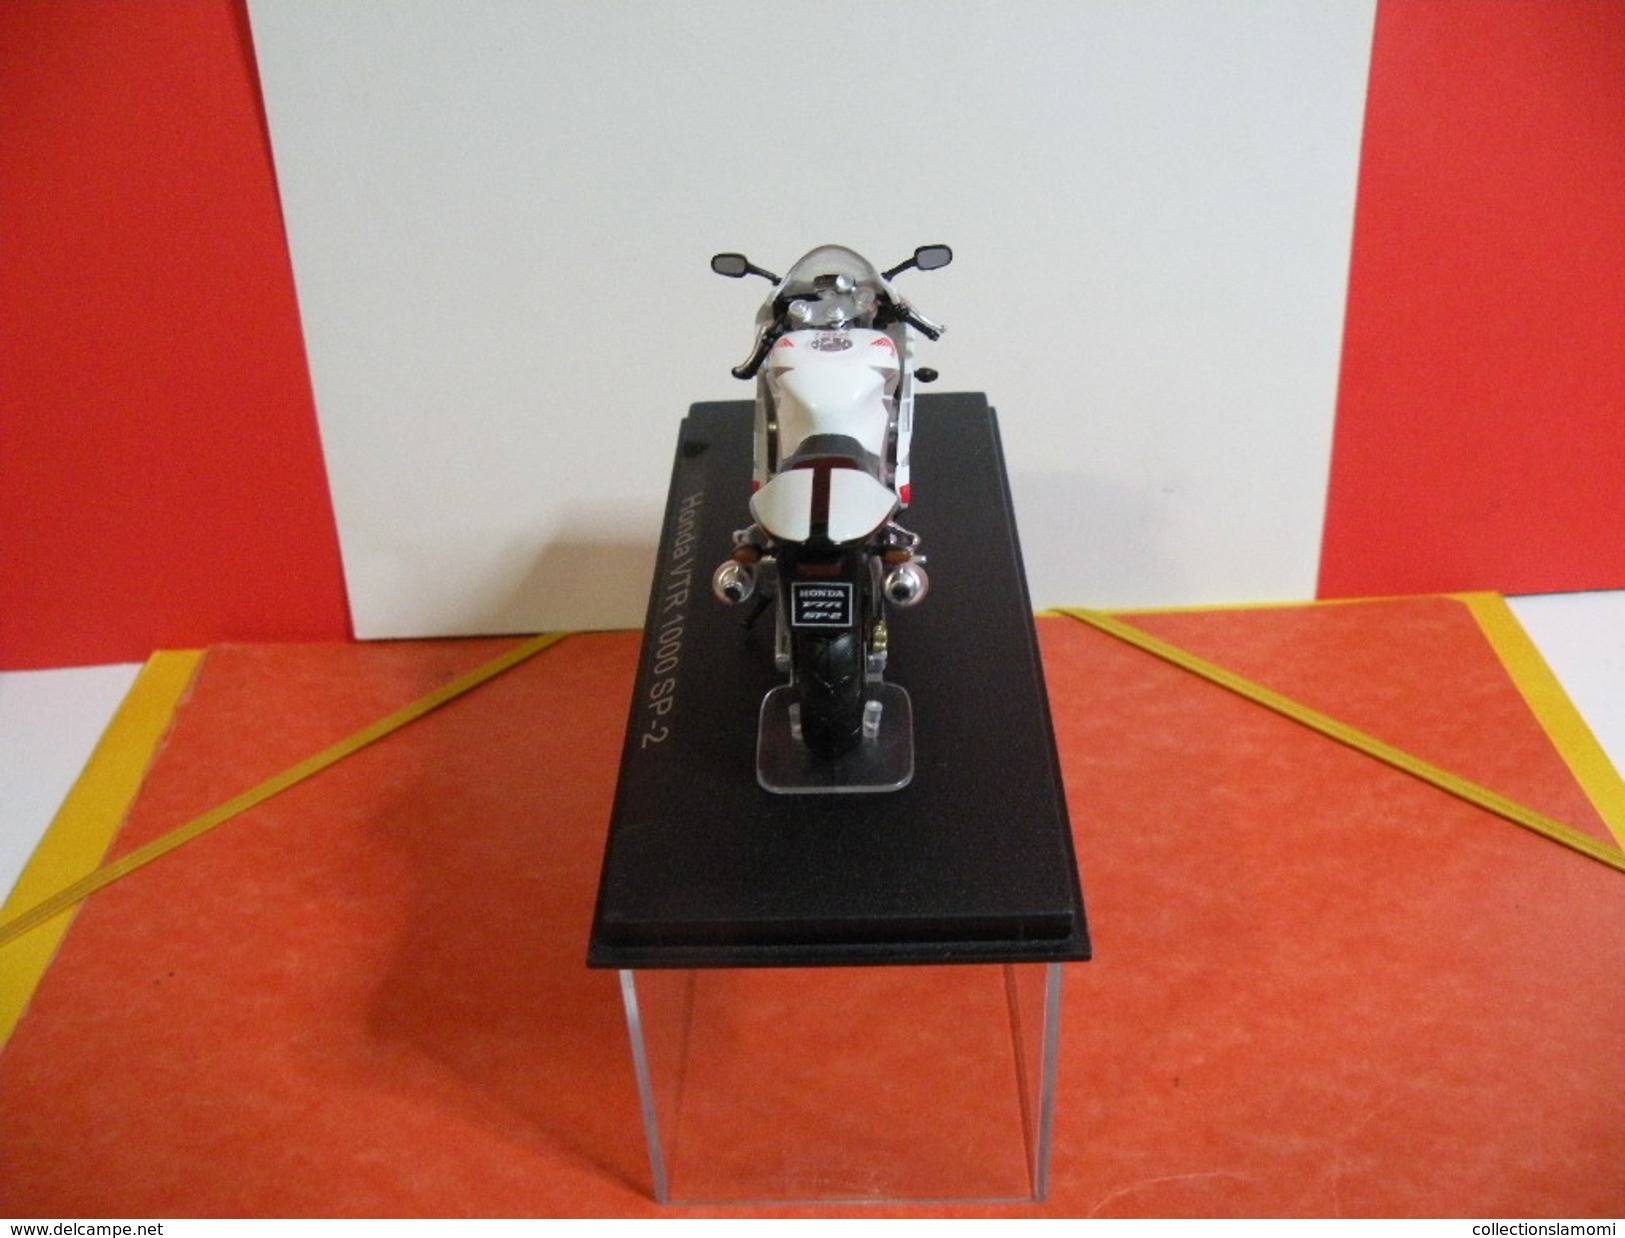 MOTO 1/24 > Honda VTR 1000 SP 2 (sous Vitrine) - Motos